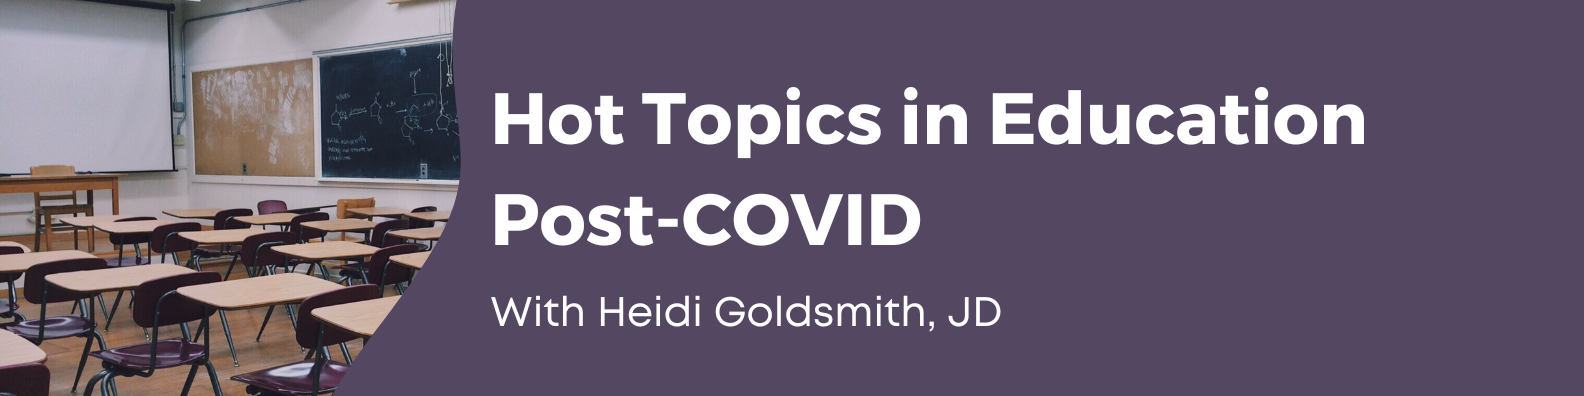 Hot Topics in Education Post-COVID, with Heidi Goldsmith, JD